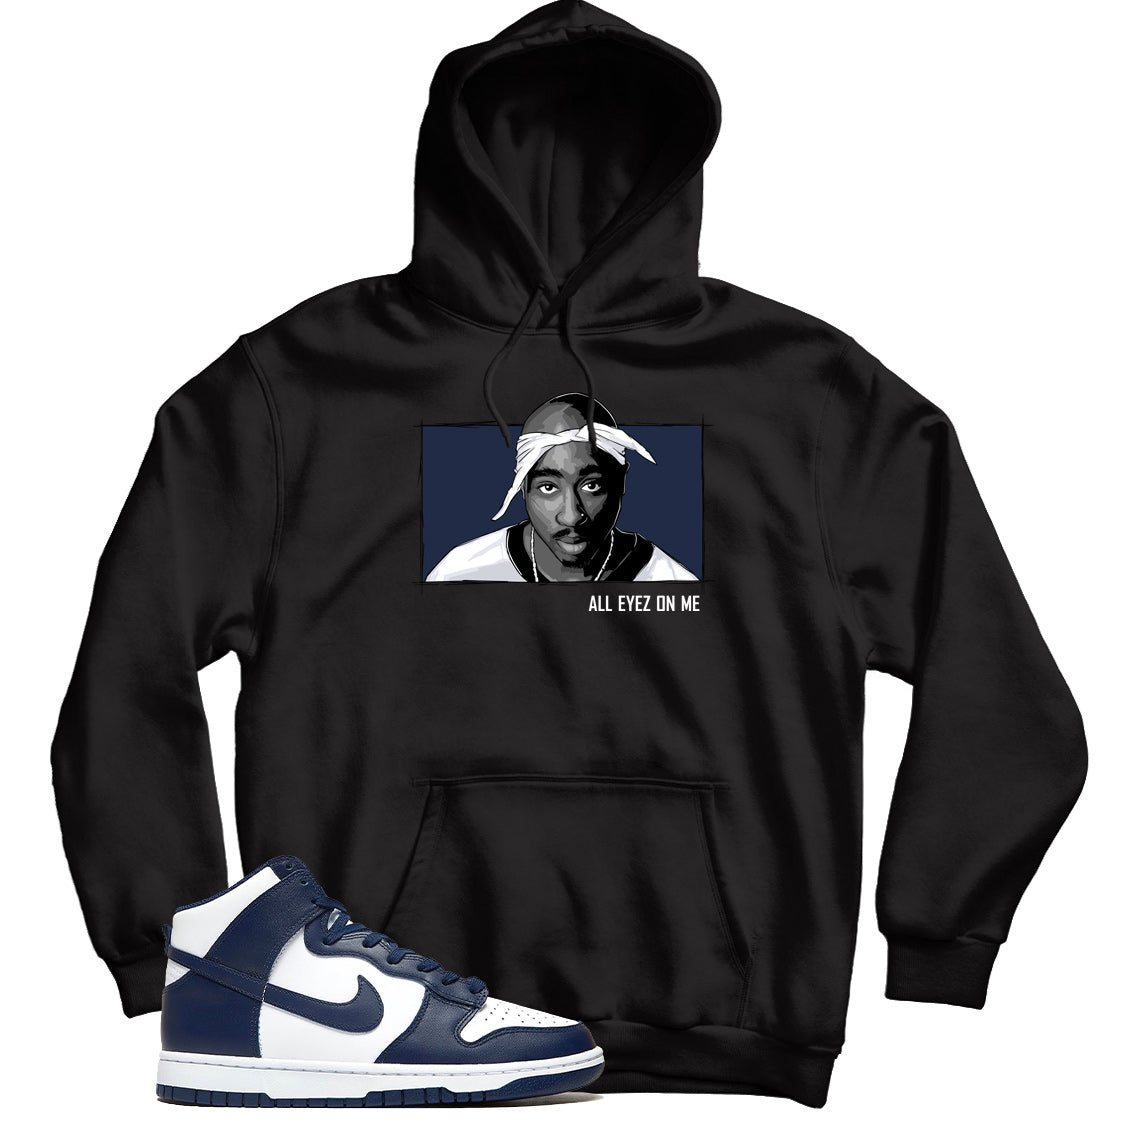 Nike Dunk High Midnight Navy hoodie